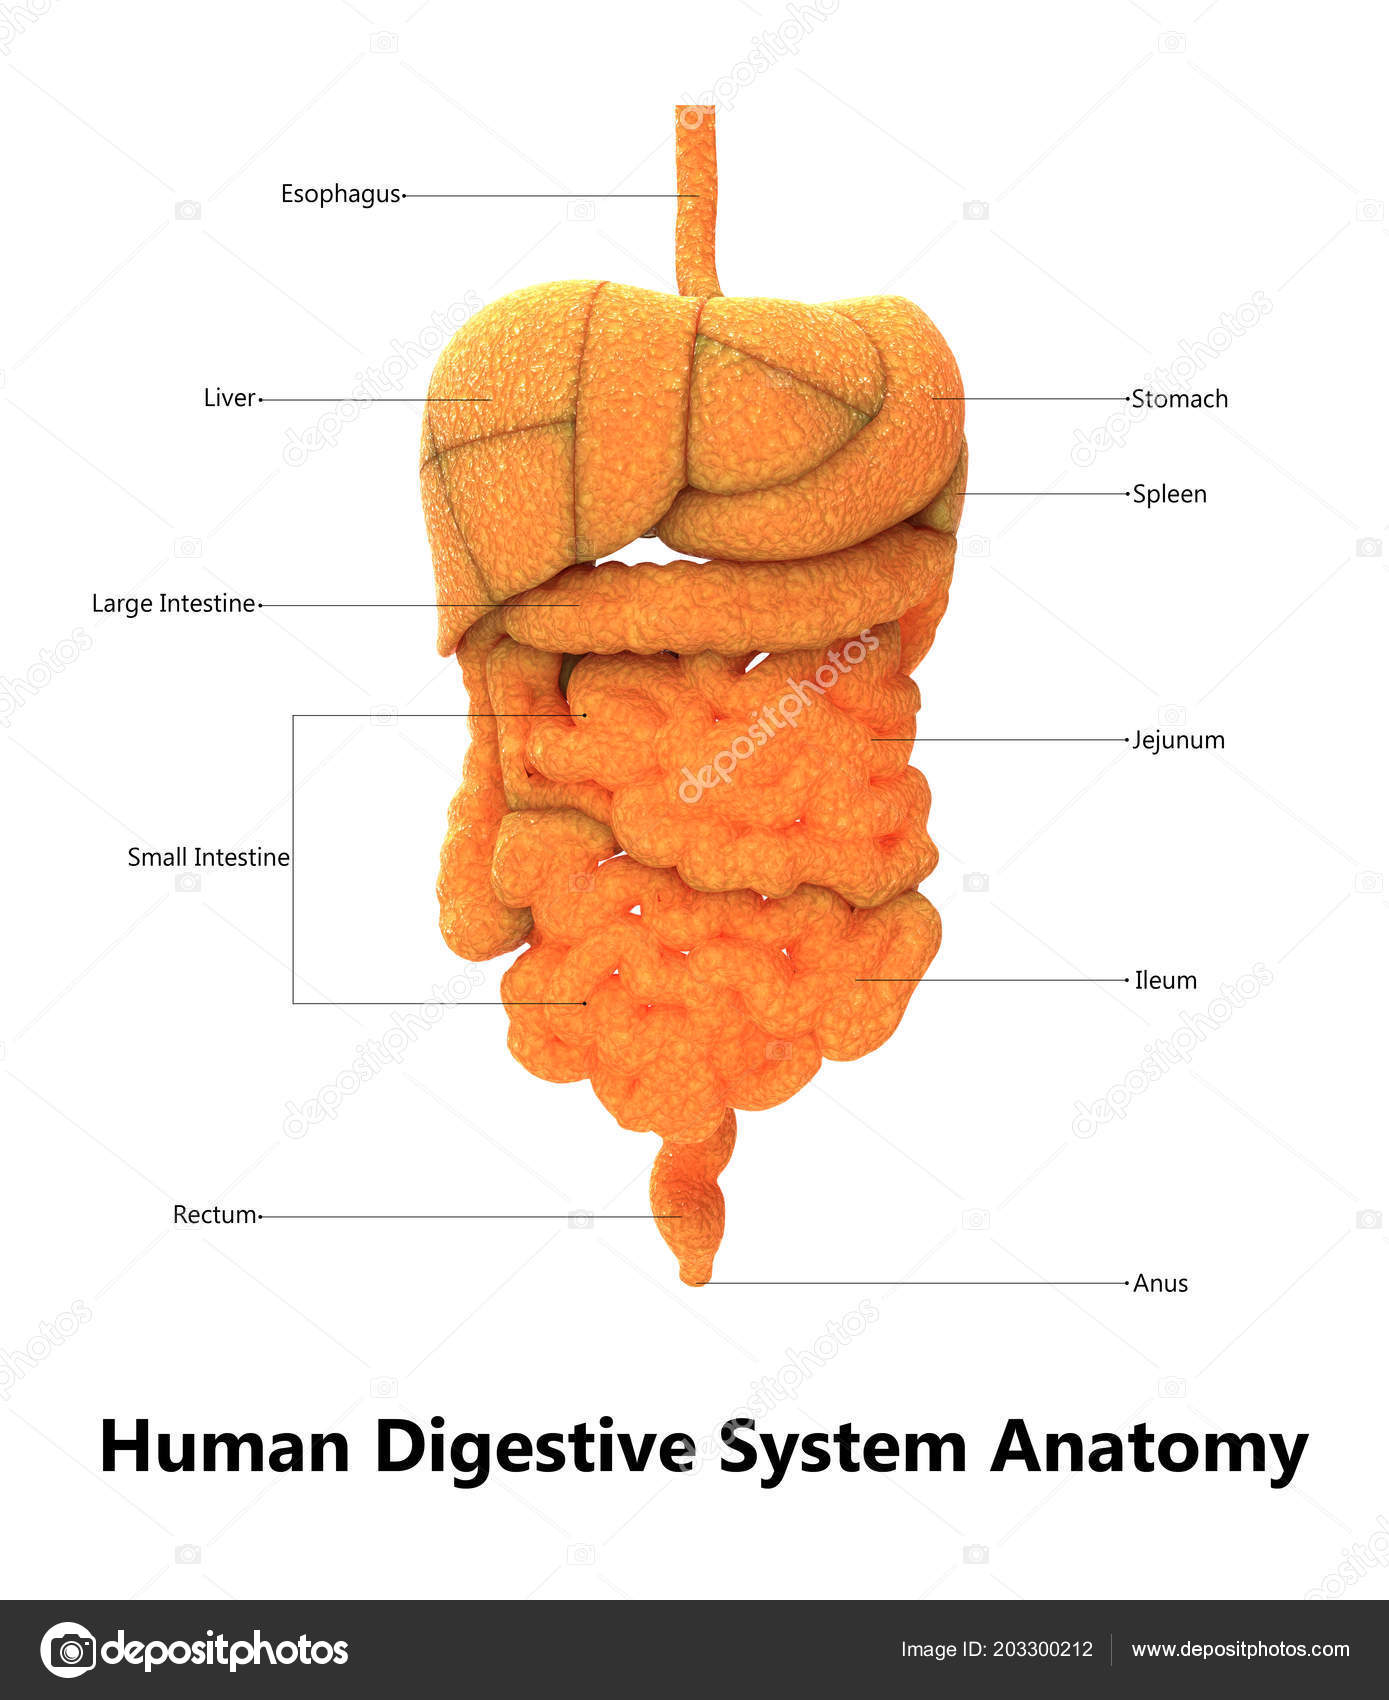 Illustration Human Digestive System Anatomy Stock Photo By ©magicmine